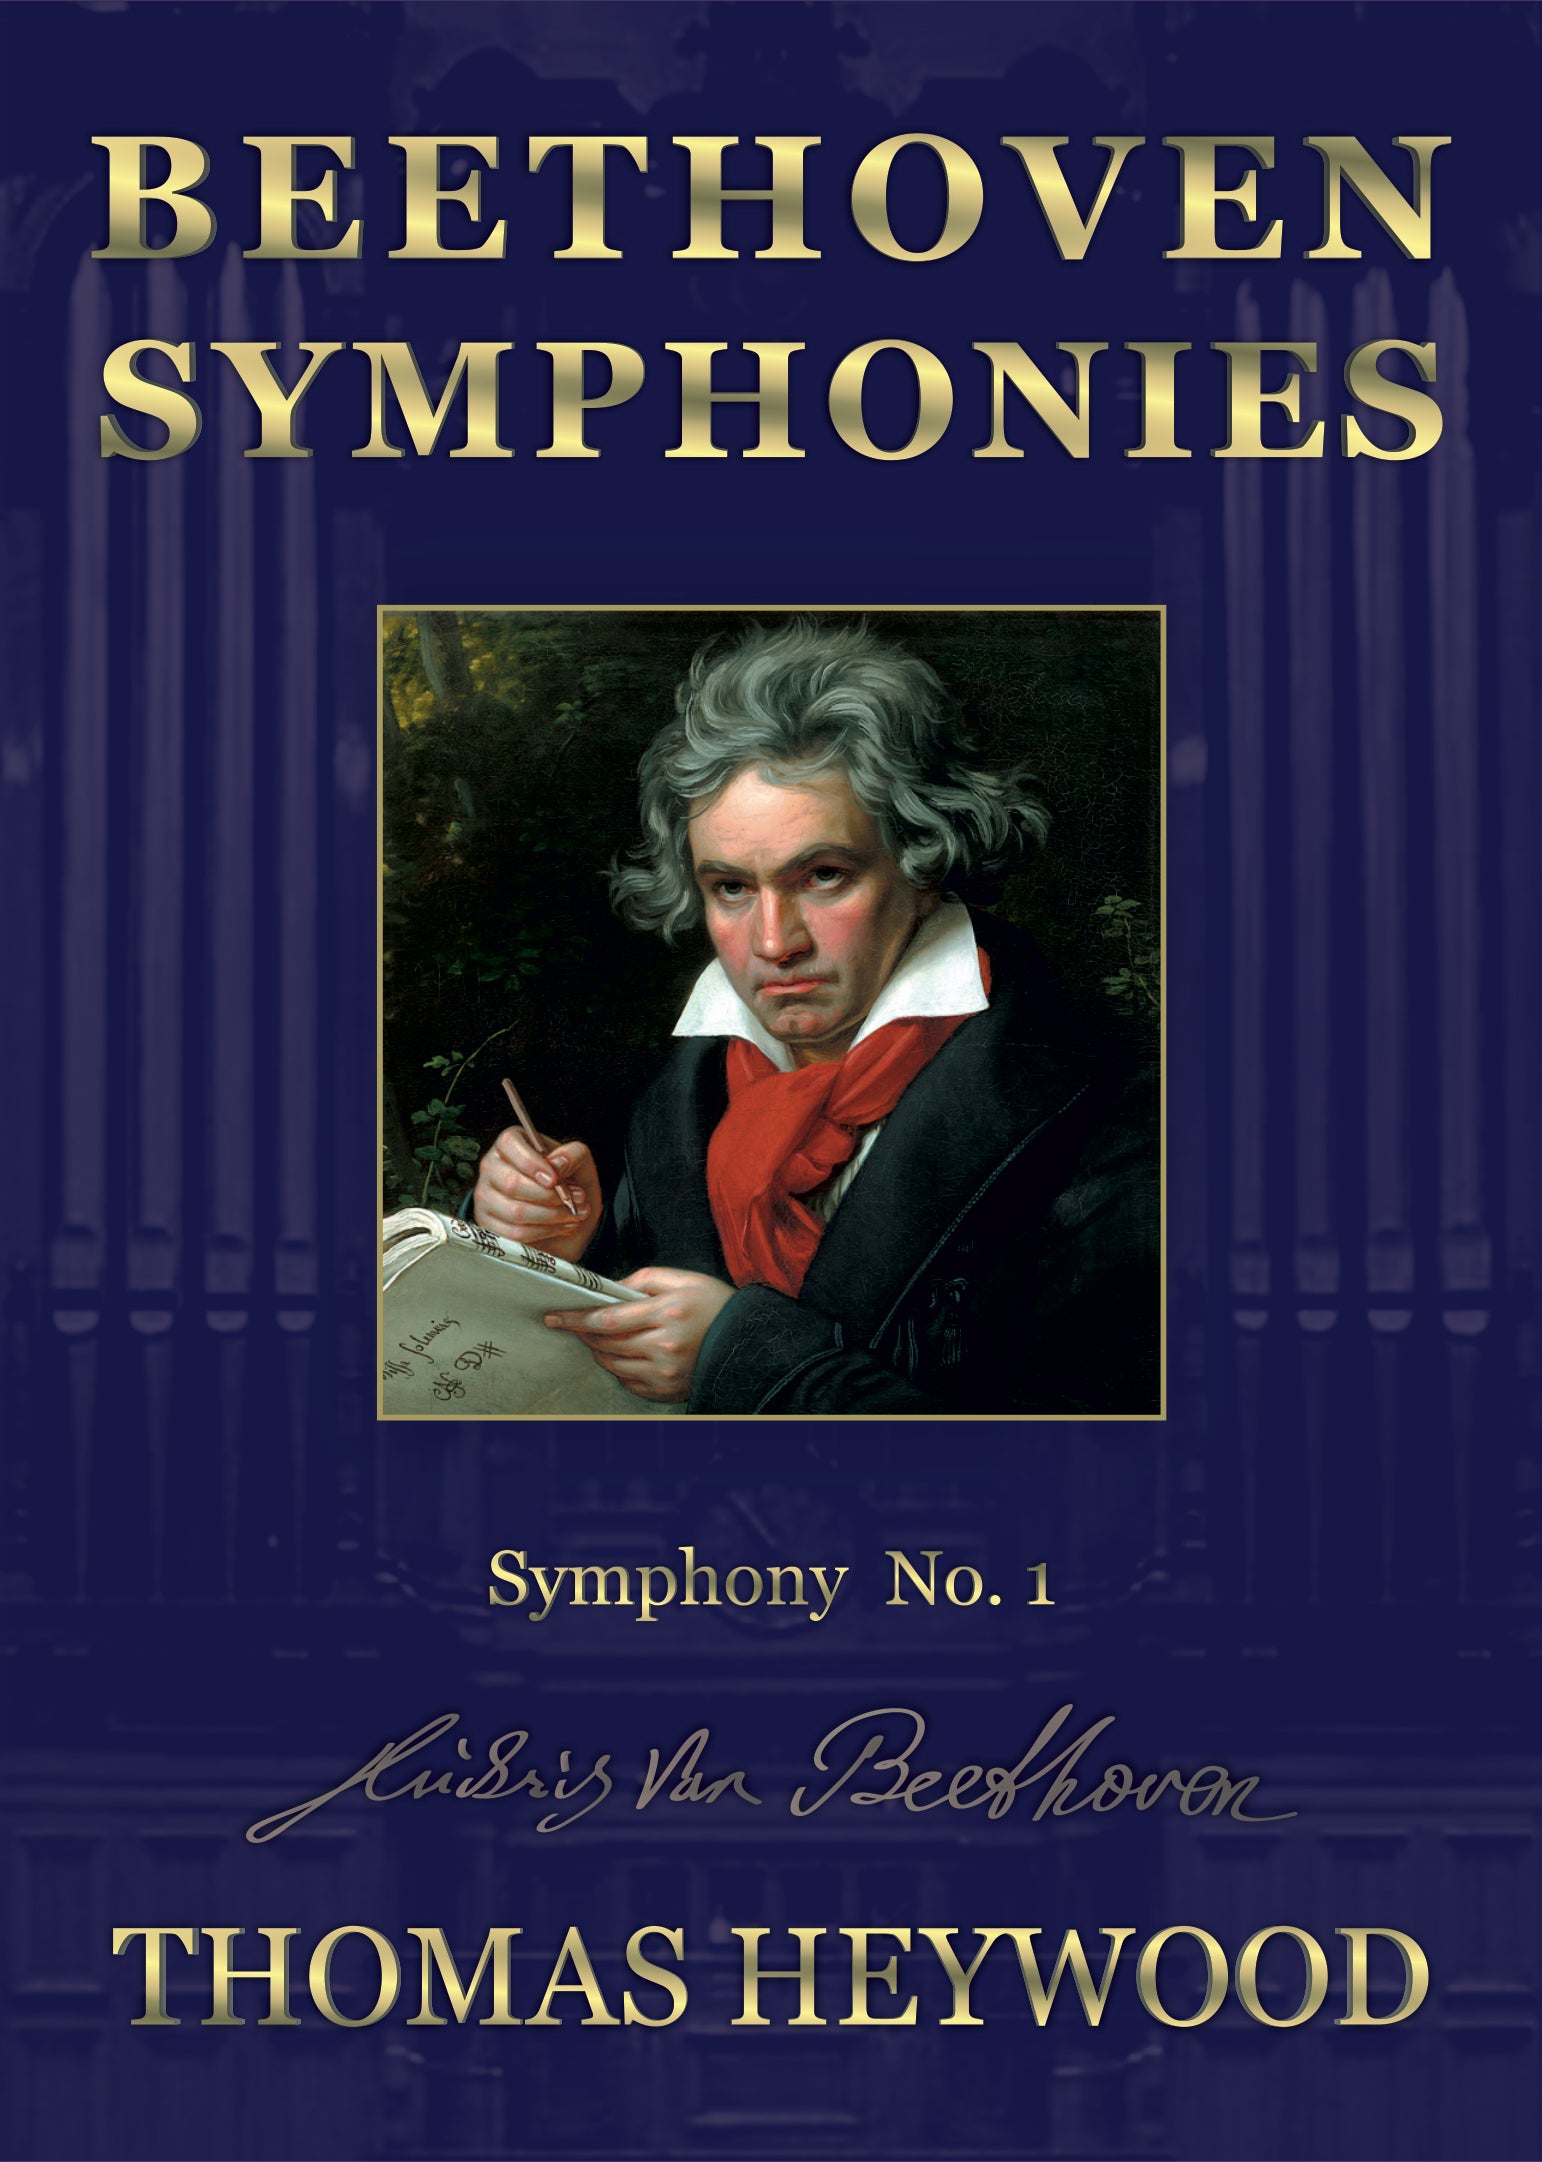 Beethoven/Heywood - Symphony No. 1 in C major, Op. 21 (MP4 Film) | Thomas Heywood | Concert Organ International